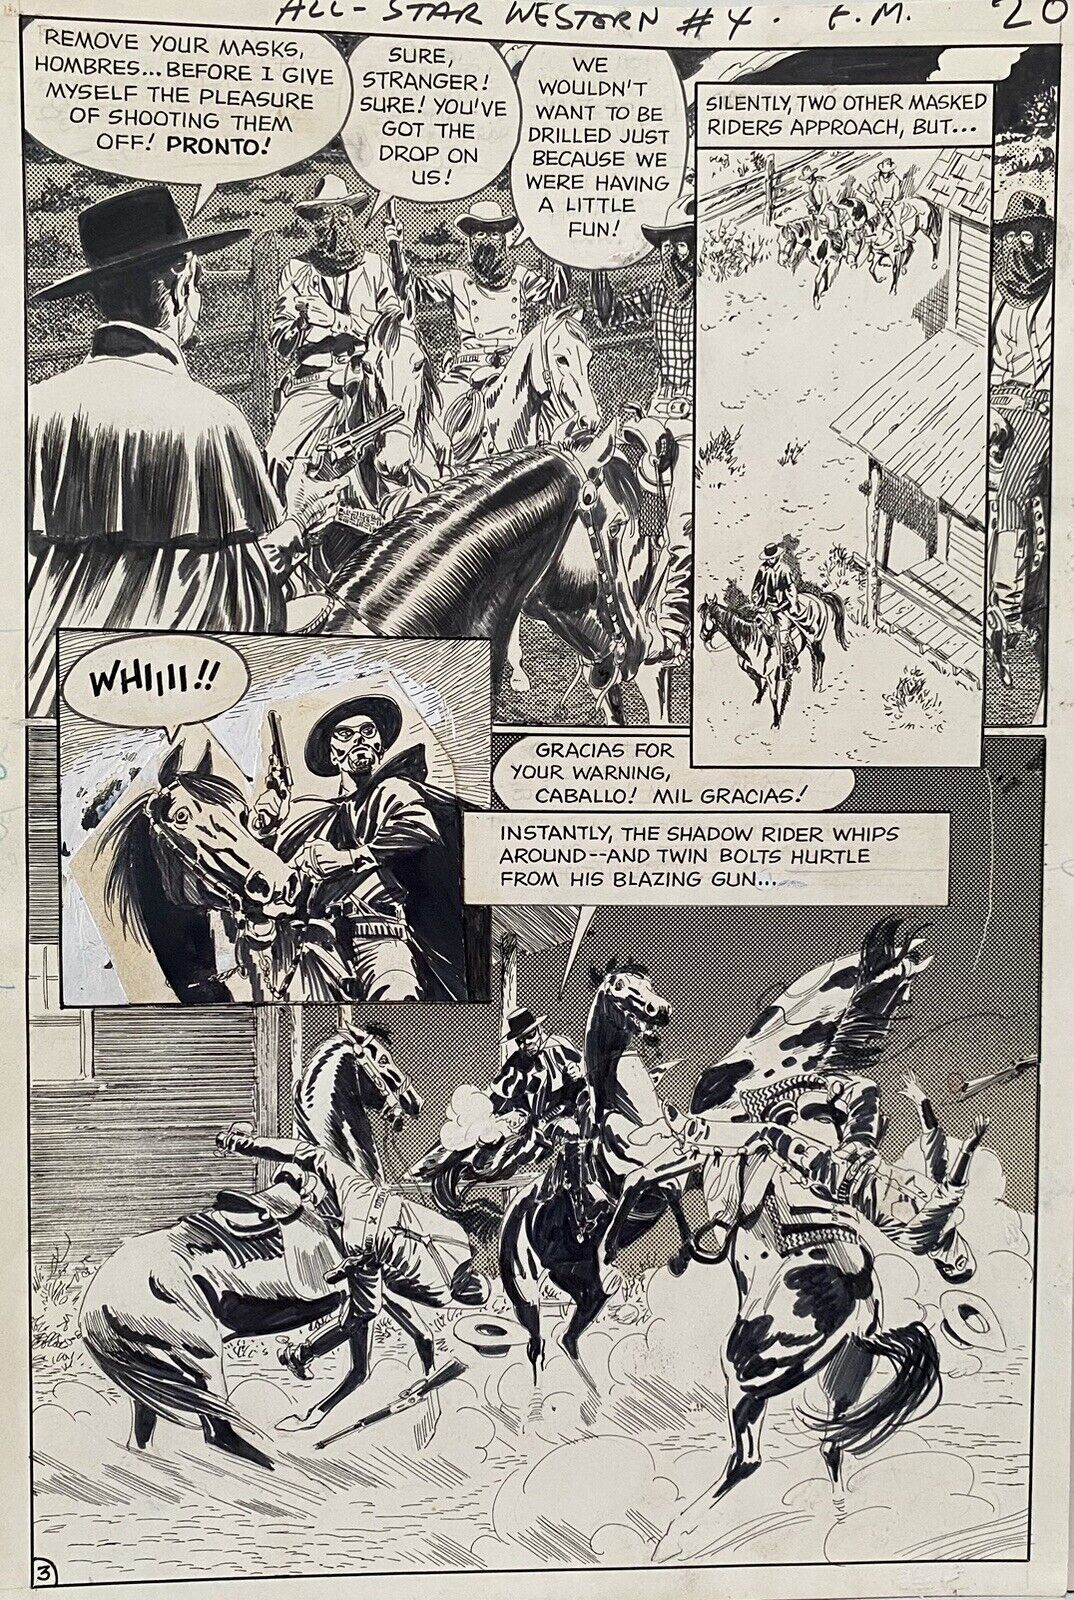 Original Art From All Star Western #4 Featuring El Diablo By Gray Morrow